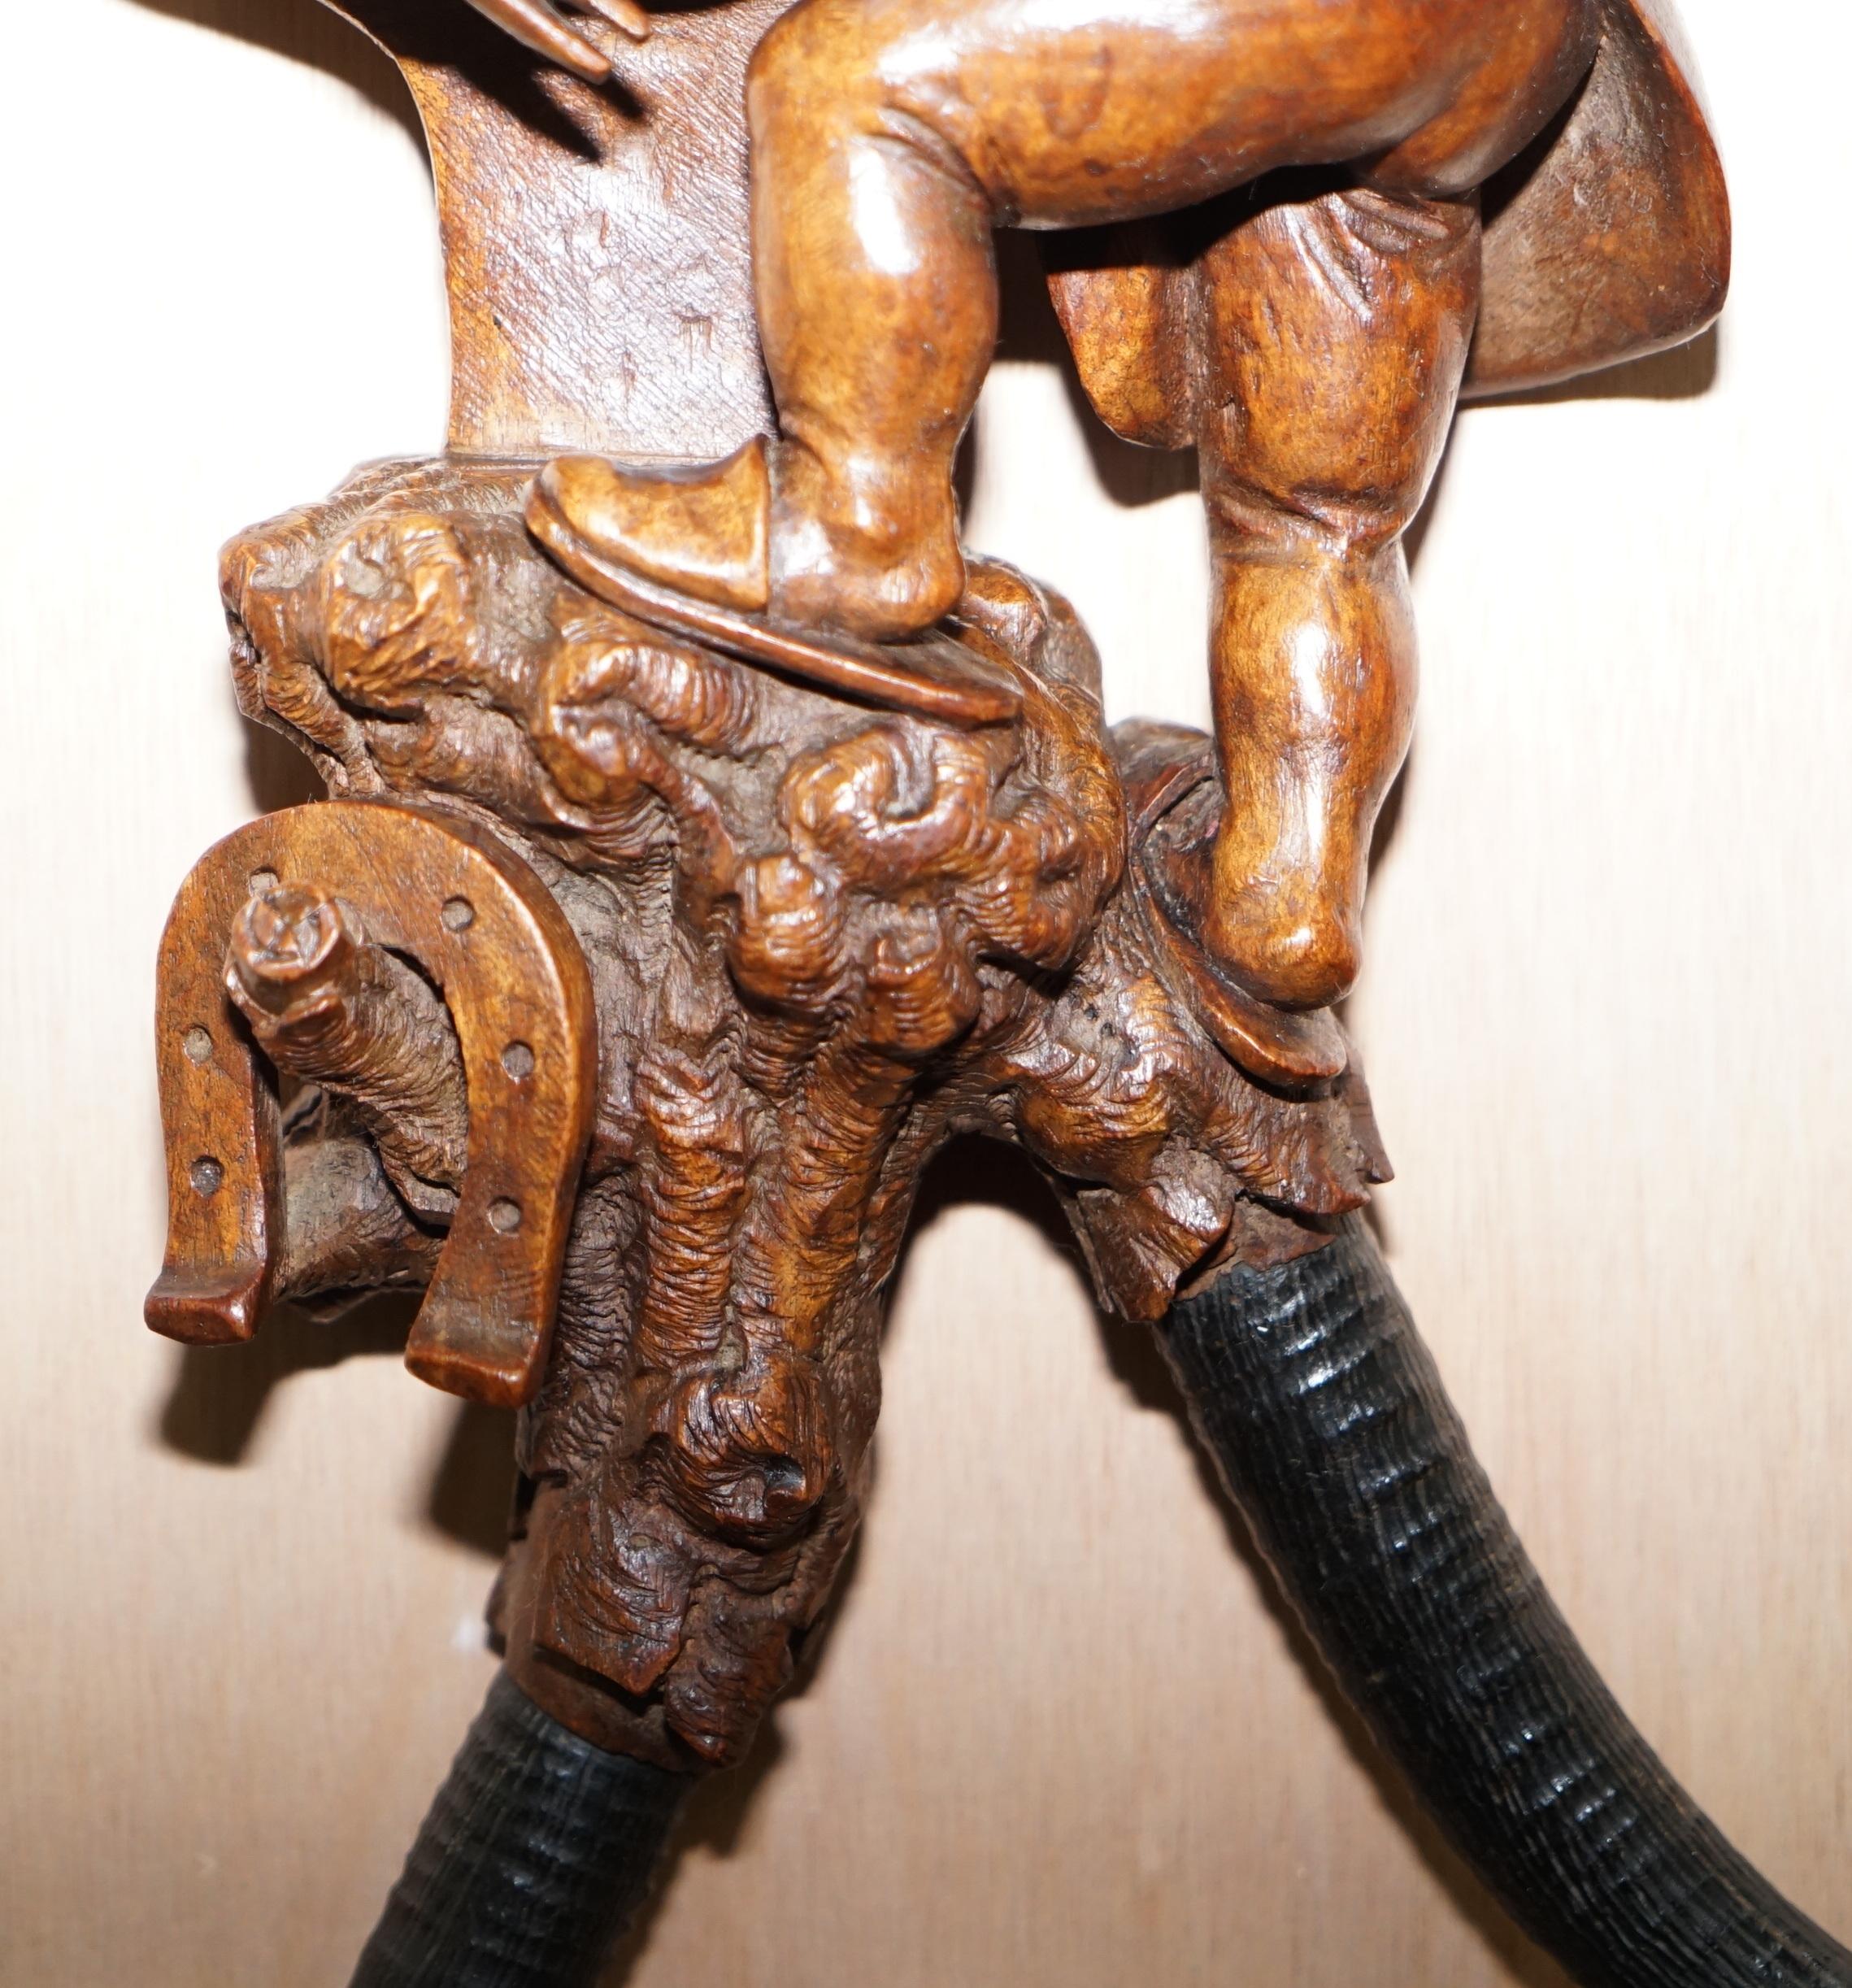 Rare Find Large circa 1880 Swiss Black Forest Whip Hook Blacksmith Dwarf Hammer 1